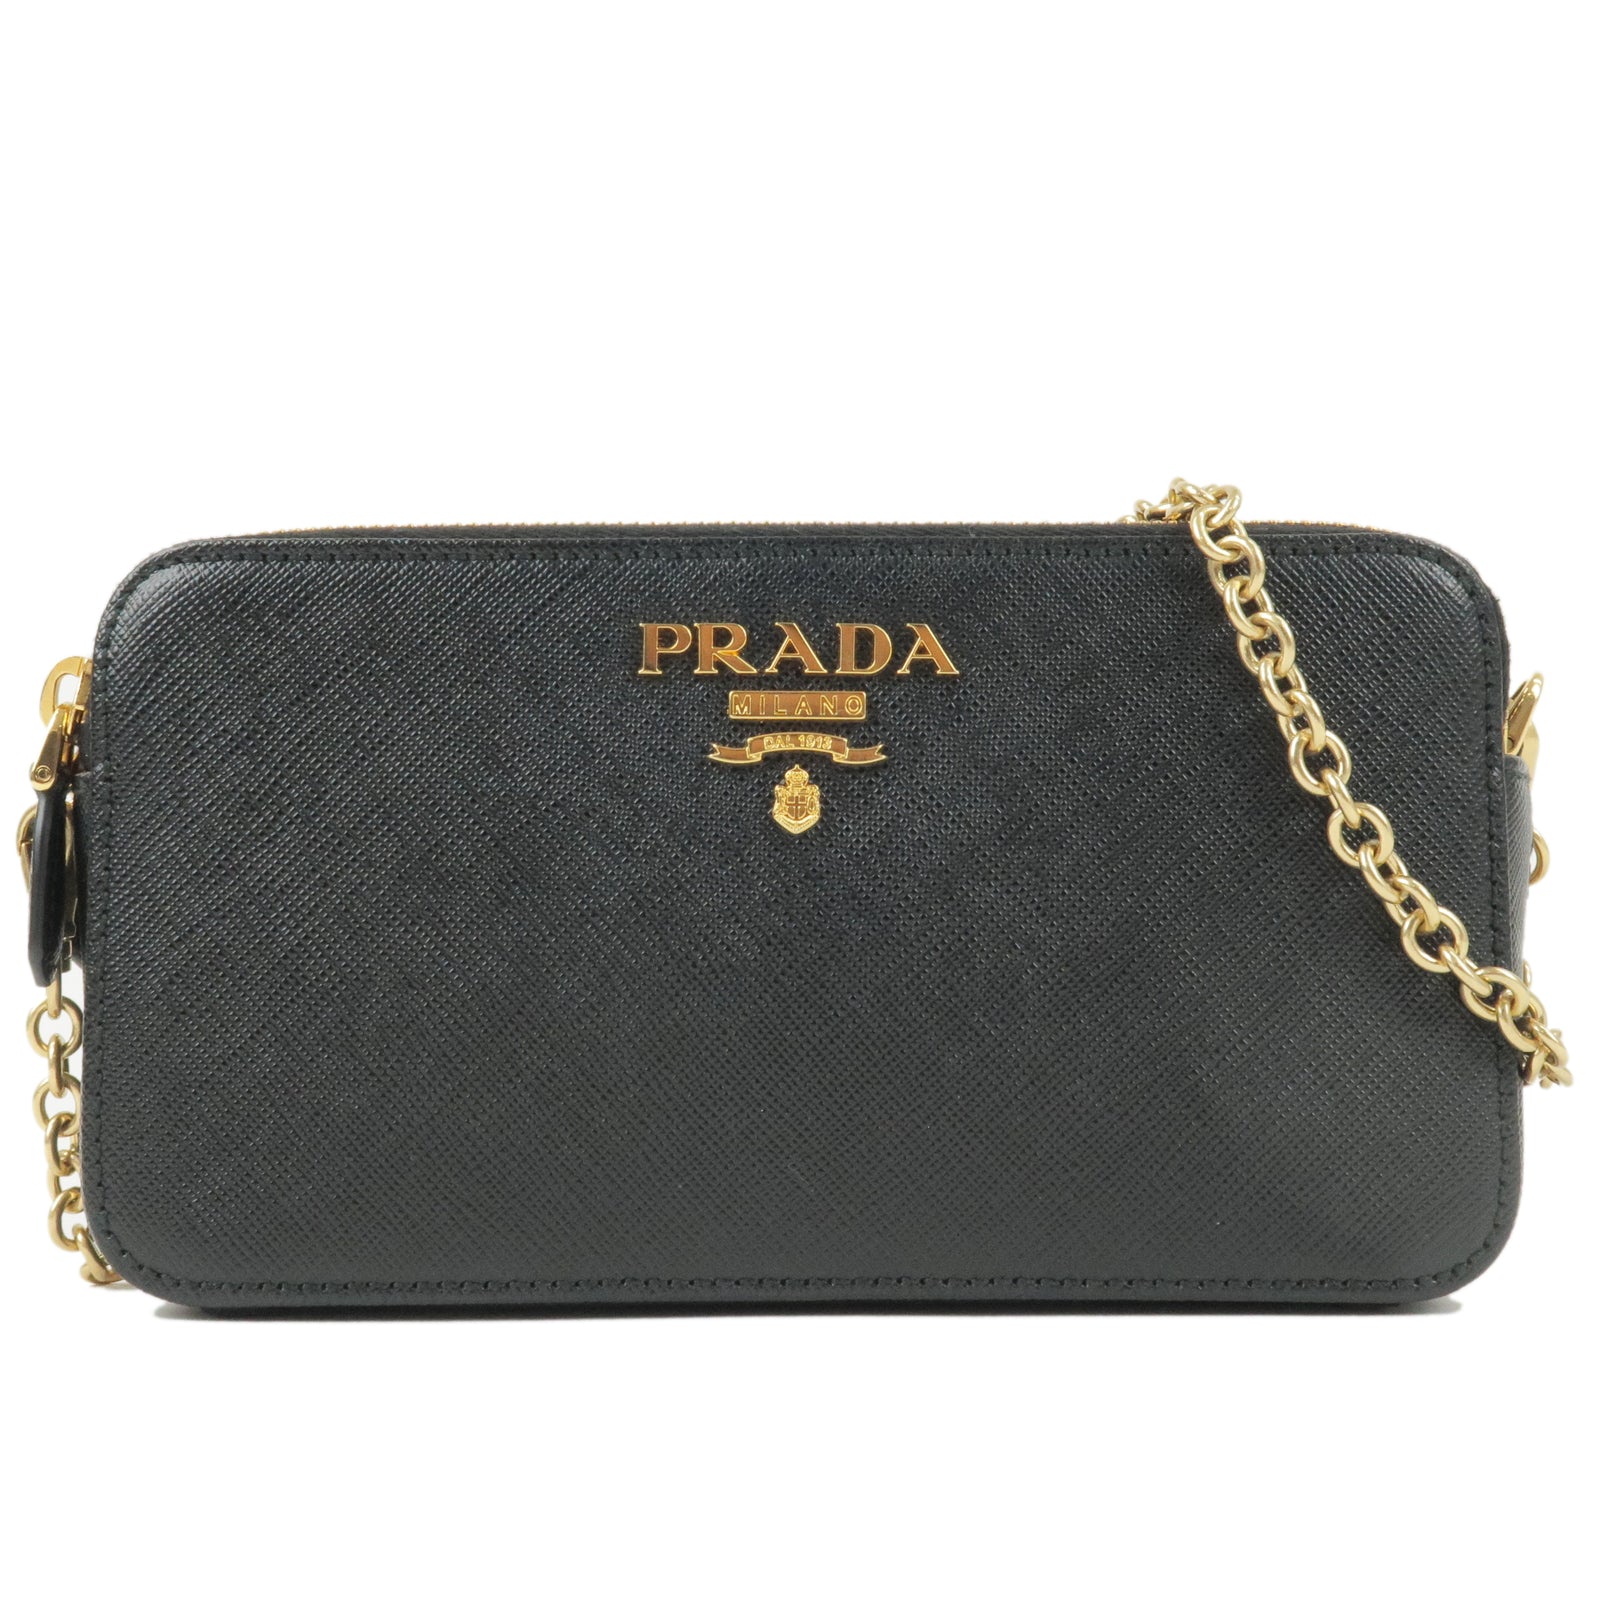 Prada Leather Chain Wallet